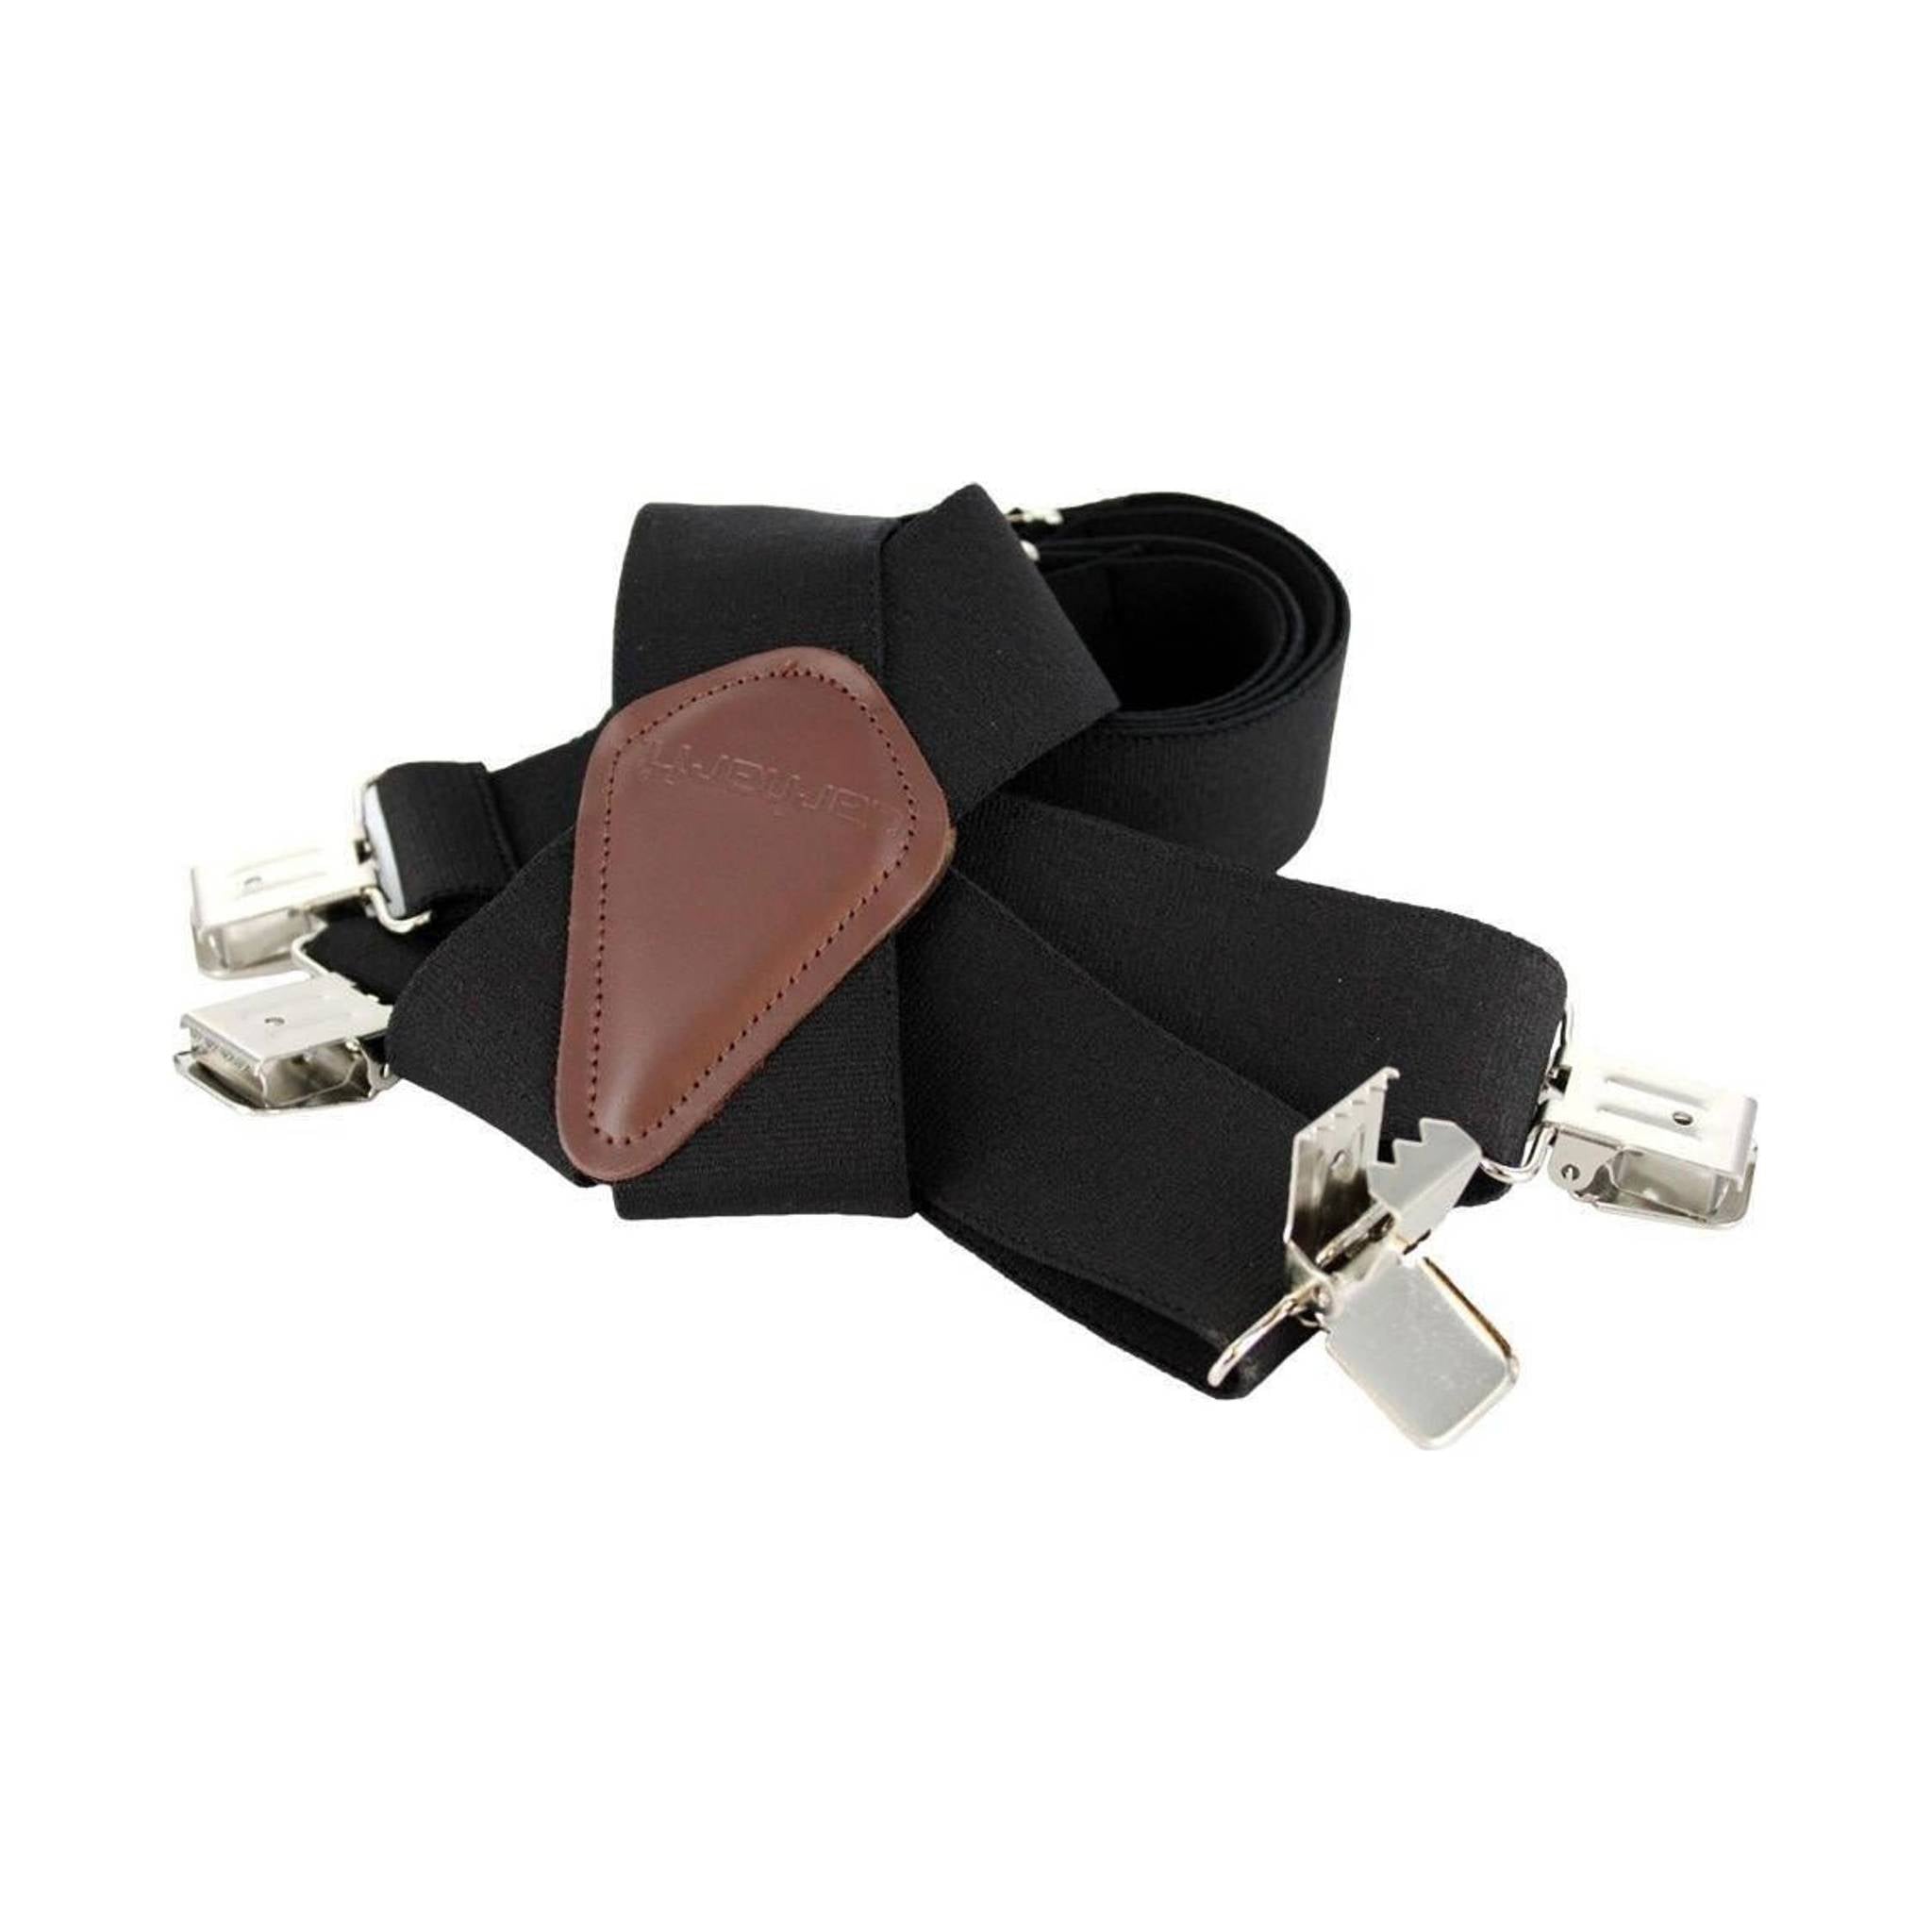 Carhartt Utility Suspenders Black